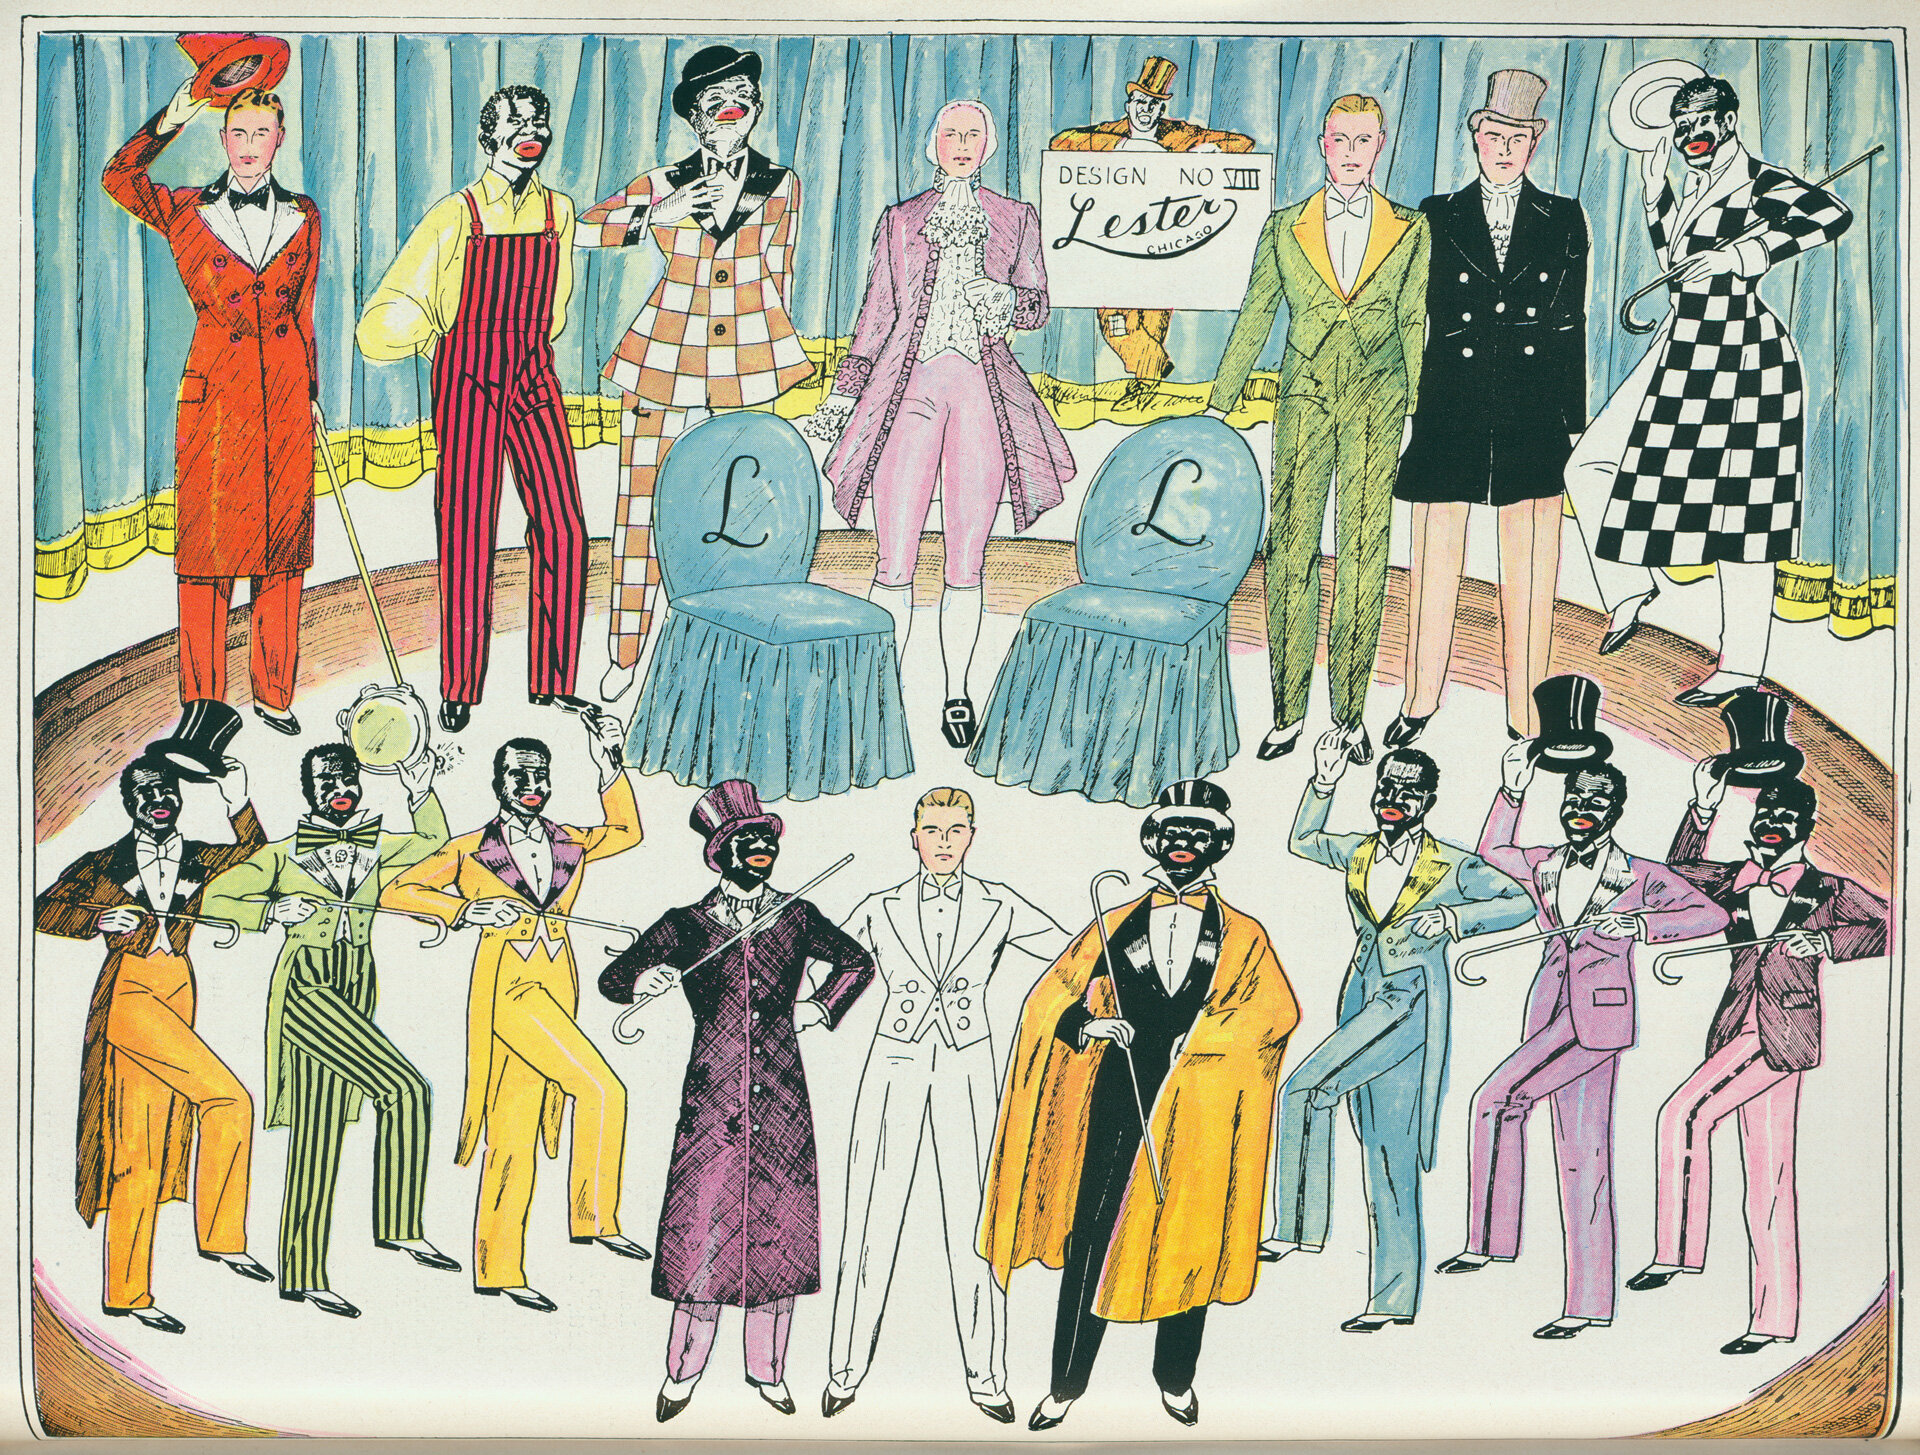 Lester Ltd.'s Distinctive Costume Designs catalogue, Chicago, 1935 (Excerpt)